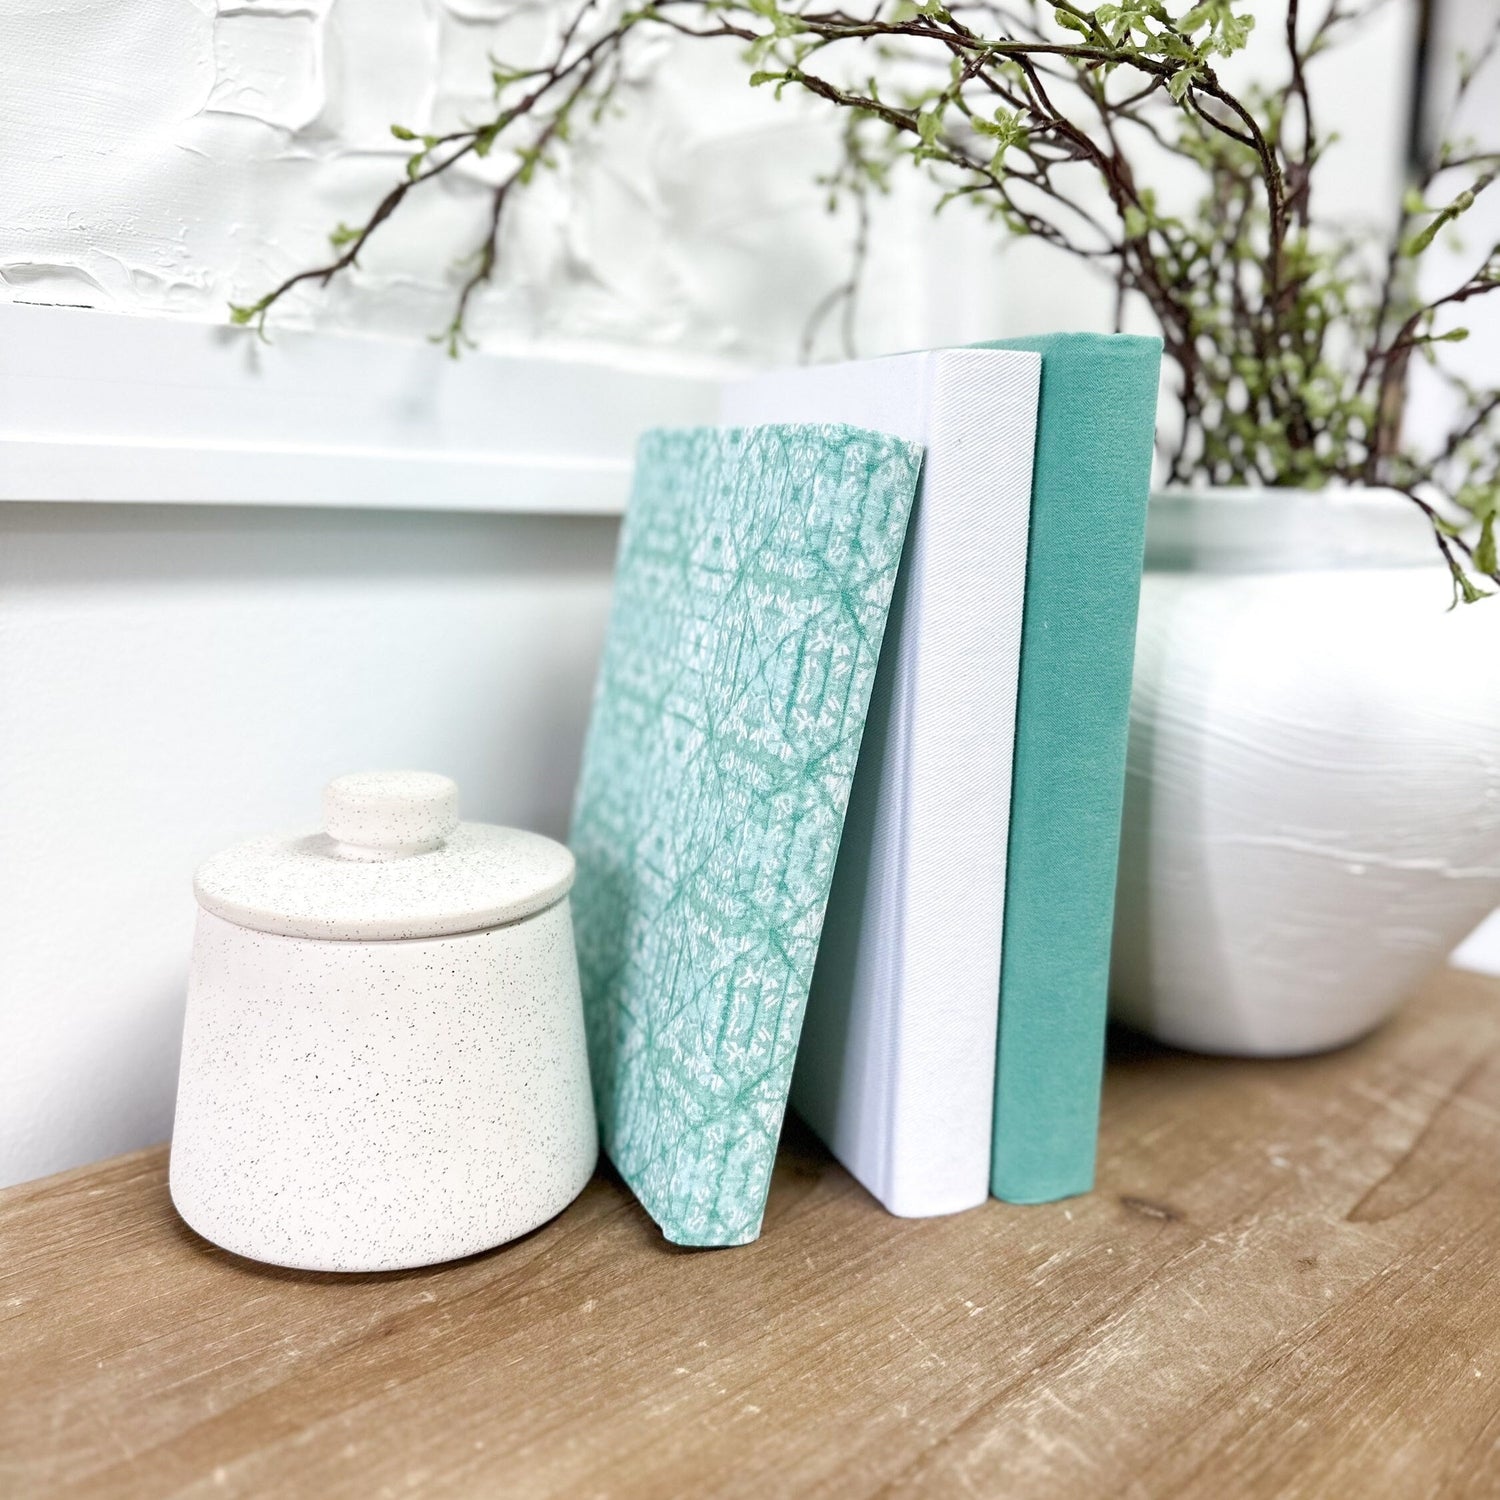 Teal Decorative Books for Home Decor, Shelf Decor, Turquoise Decor